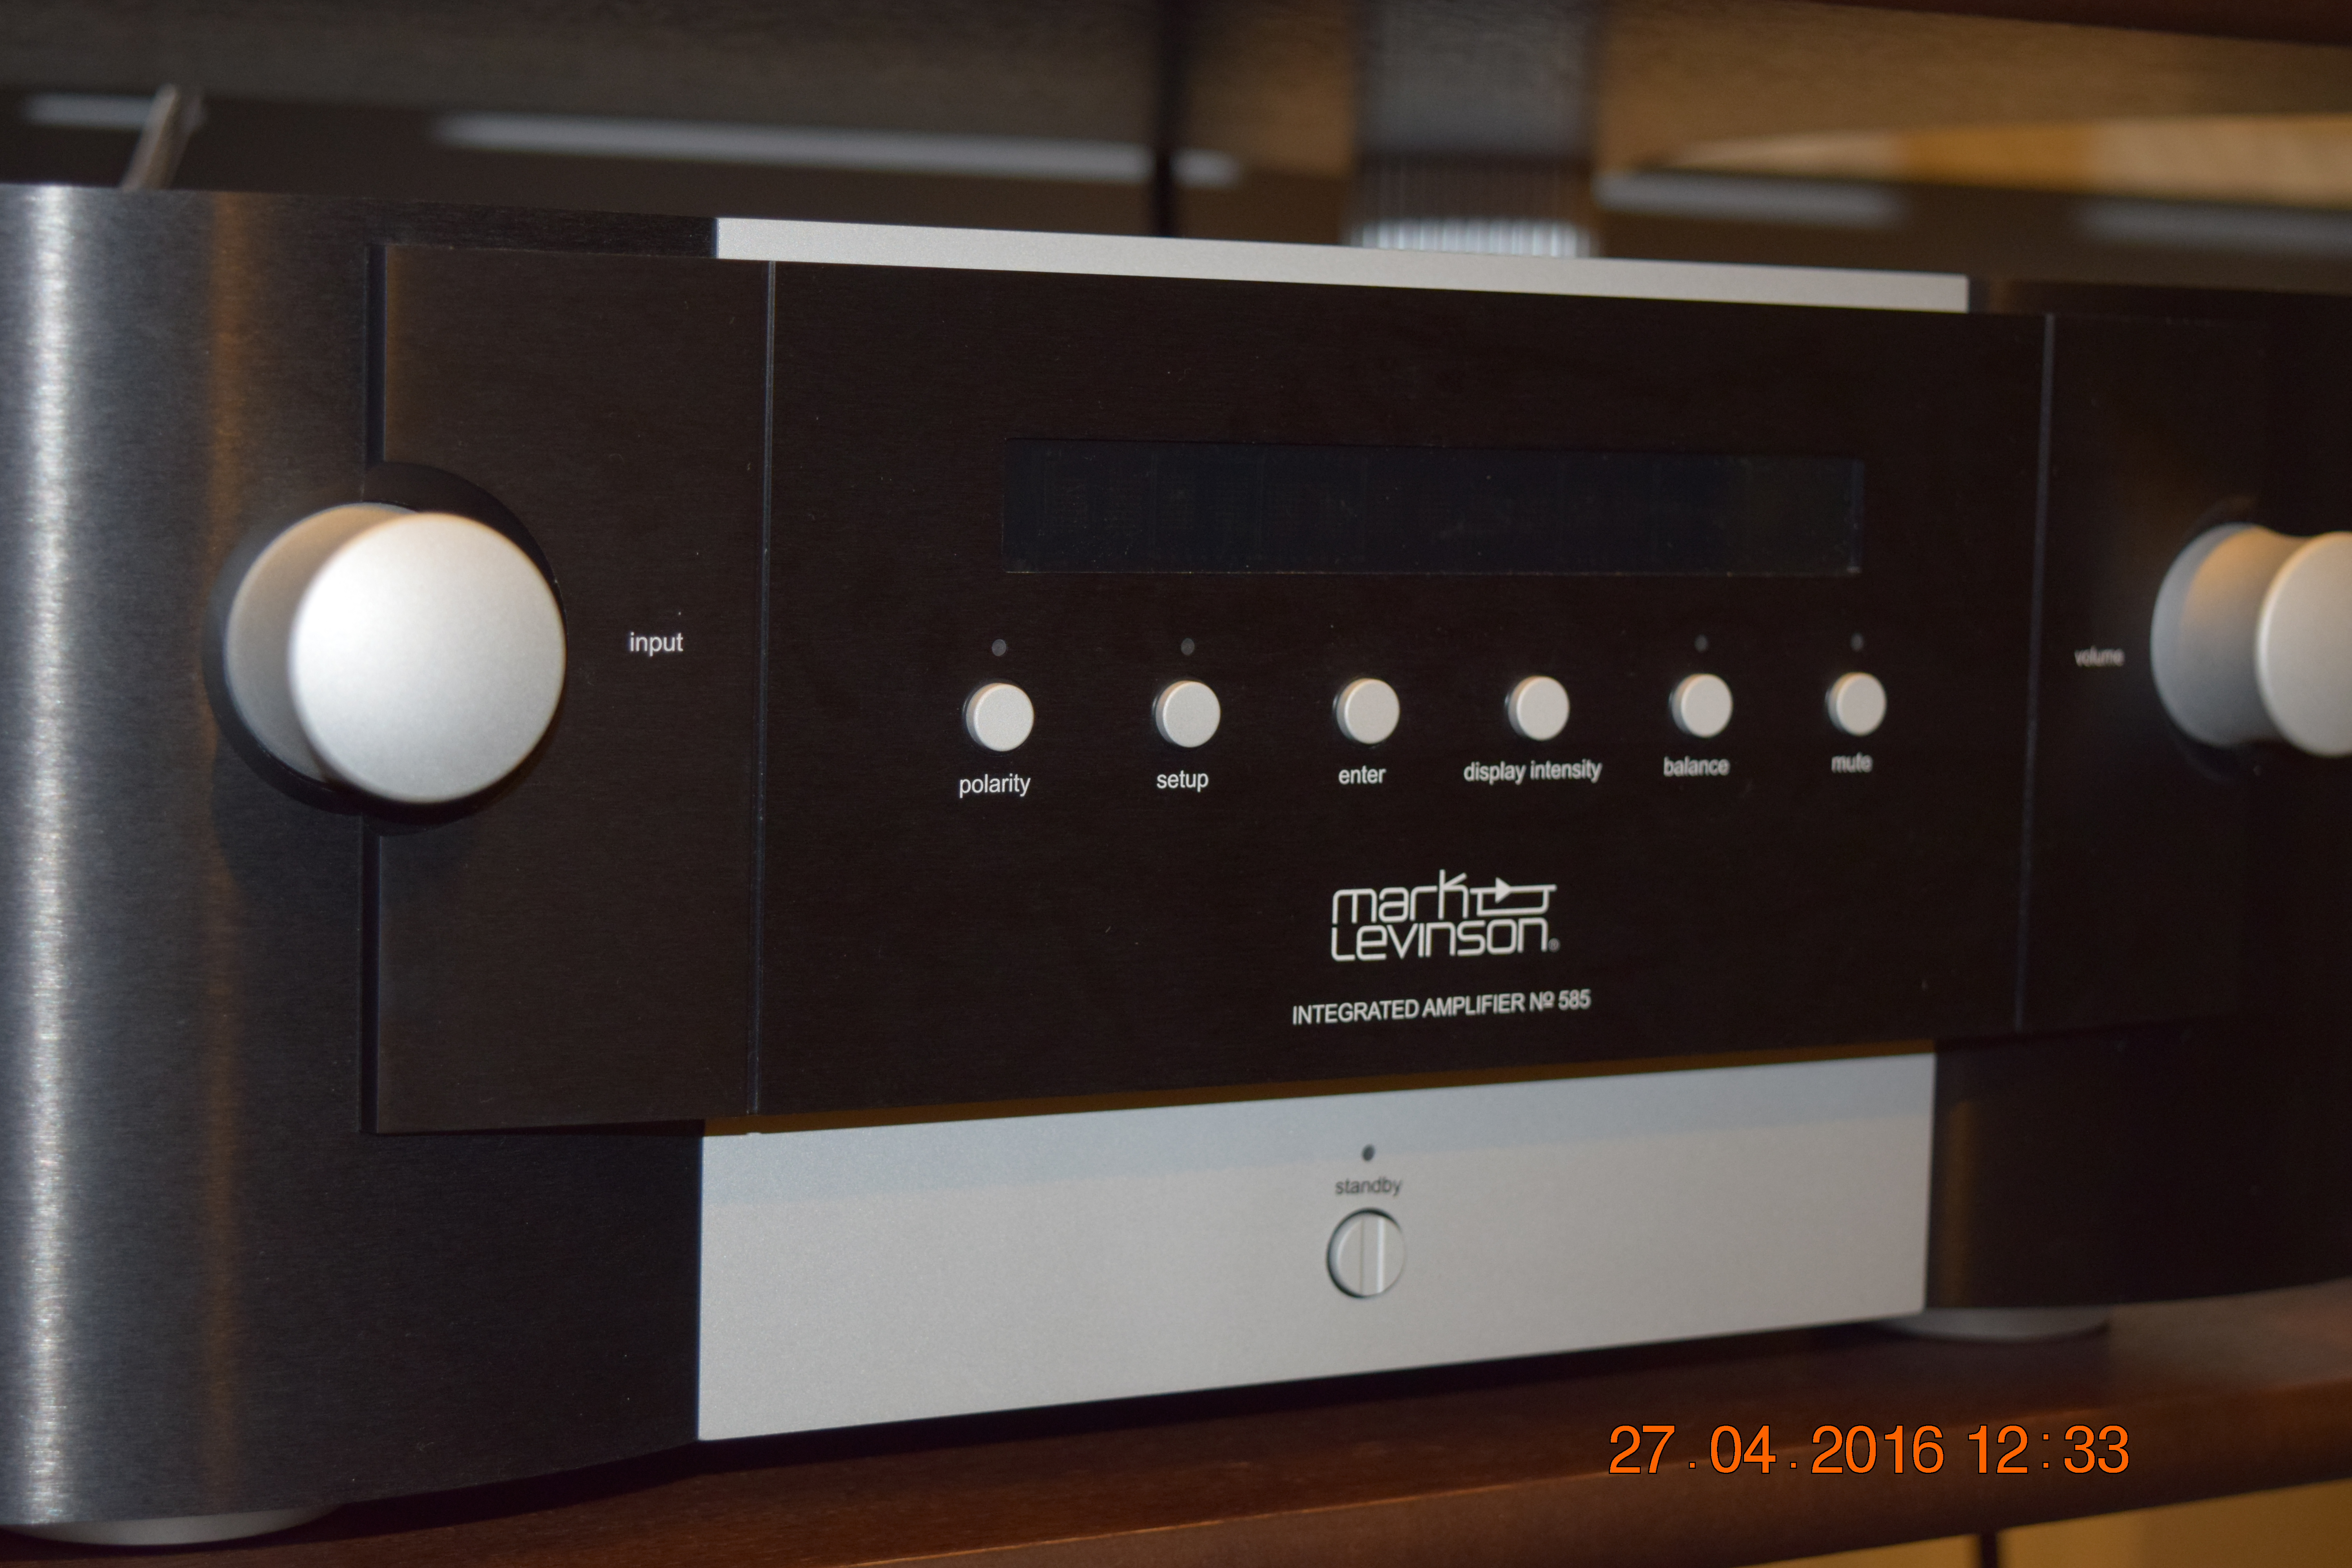 Mark Levinson integrated amplifier №585